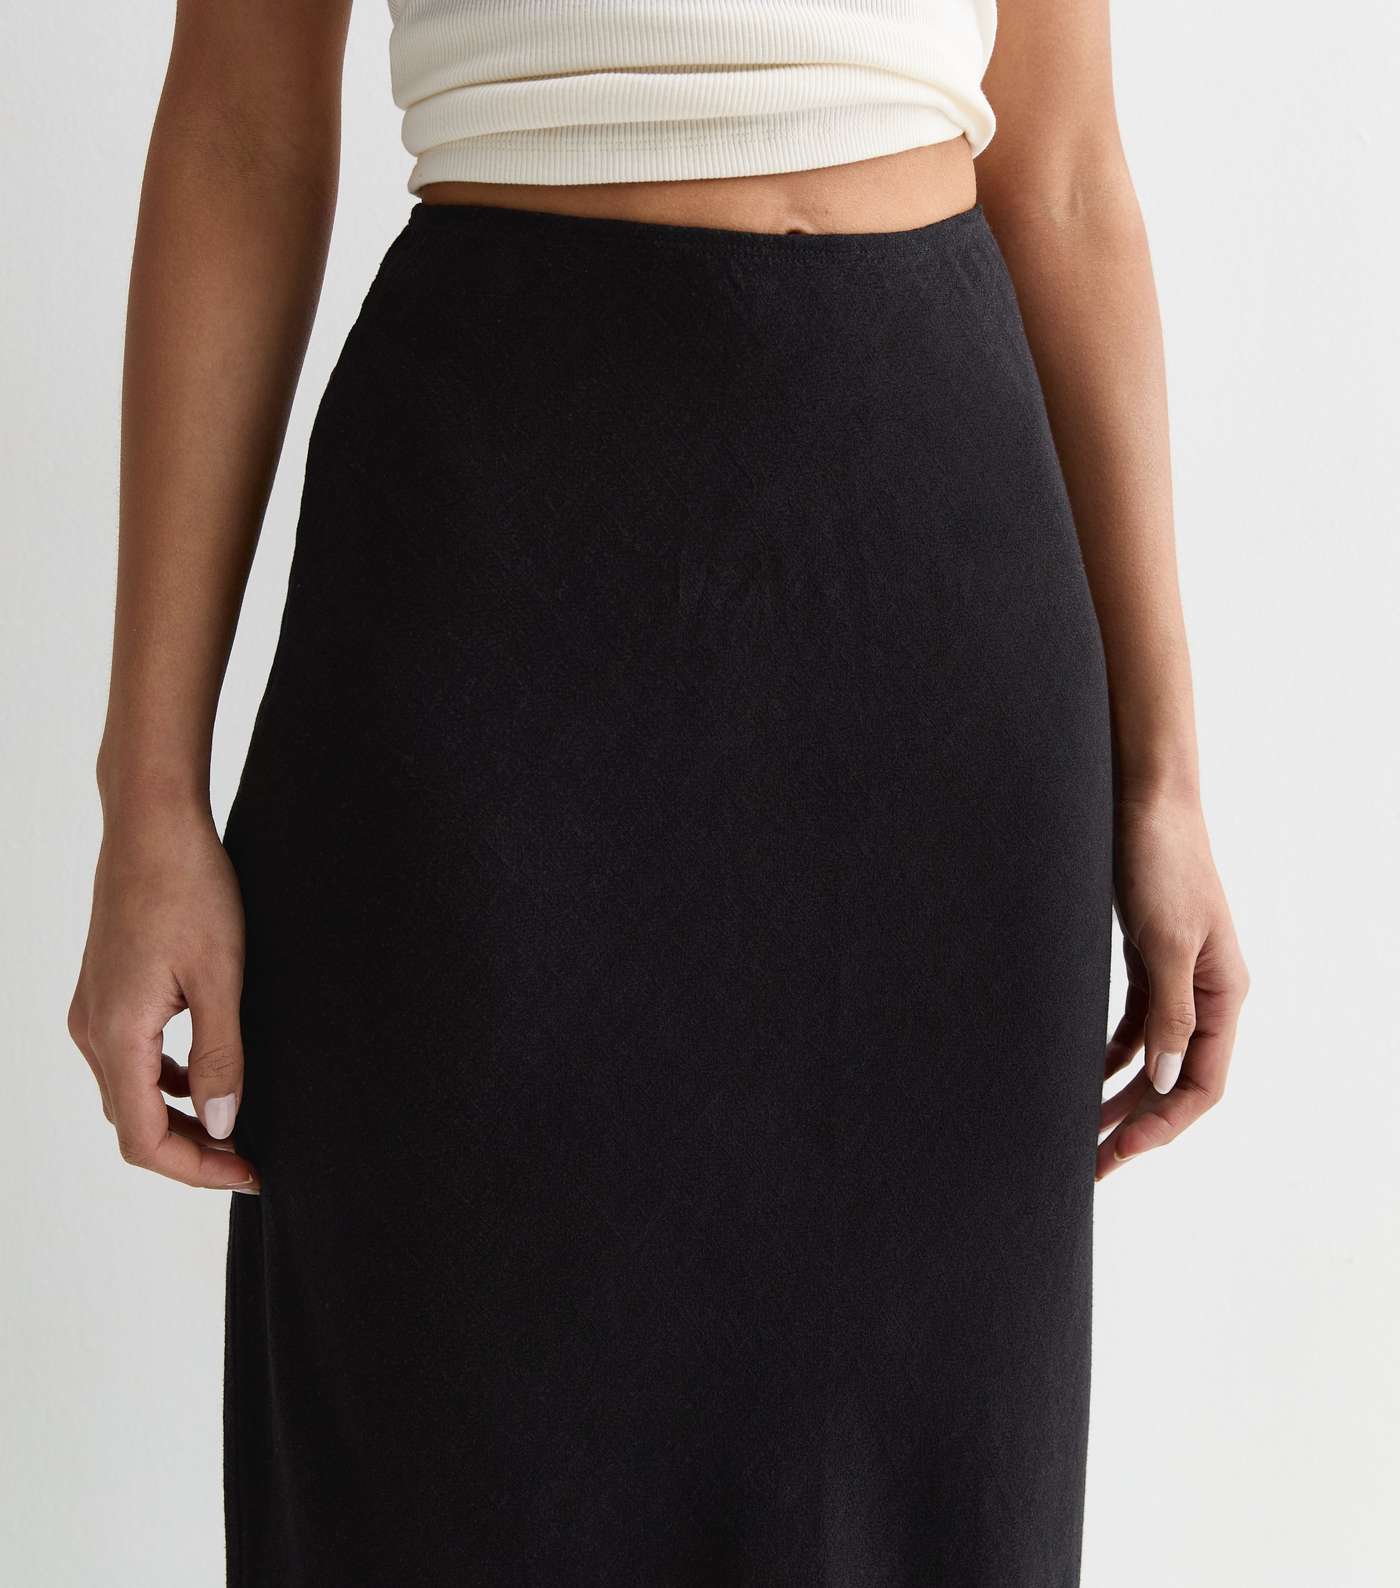 Black Bias Cut Maxi Skirt Image 2